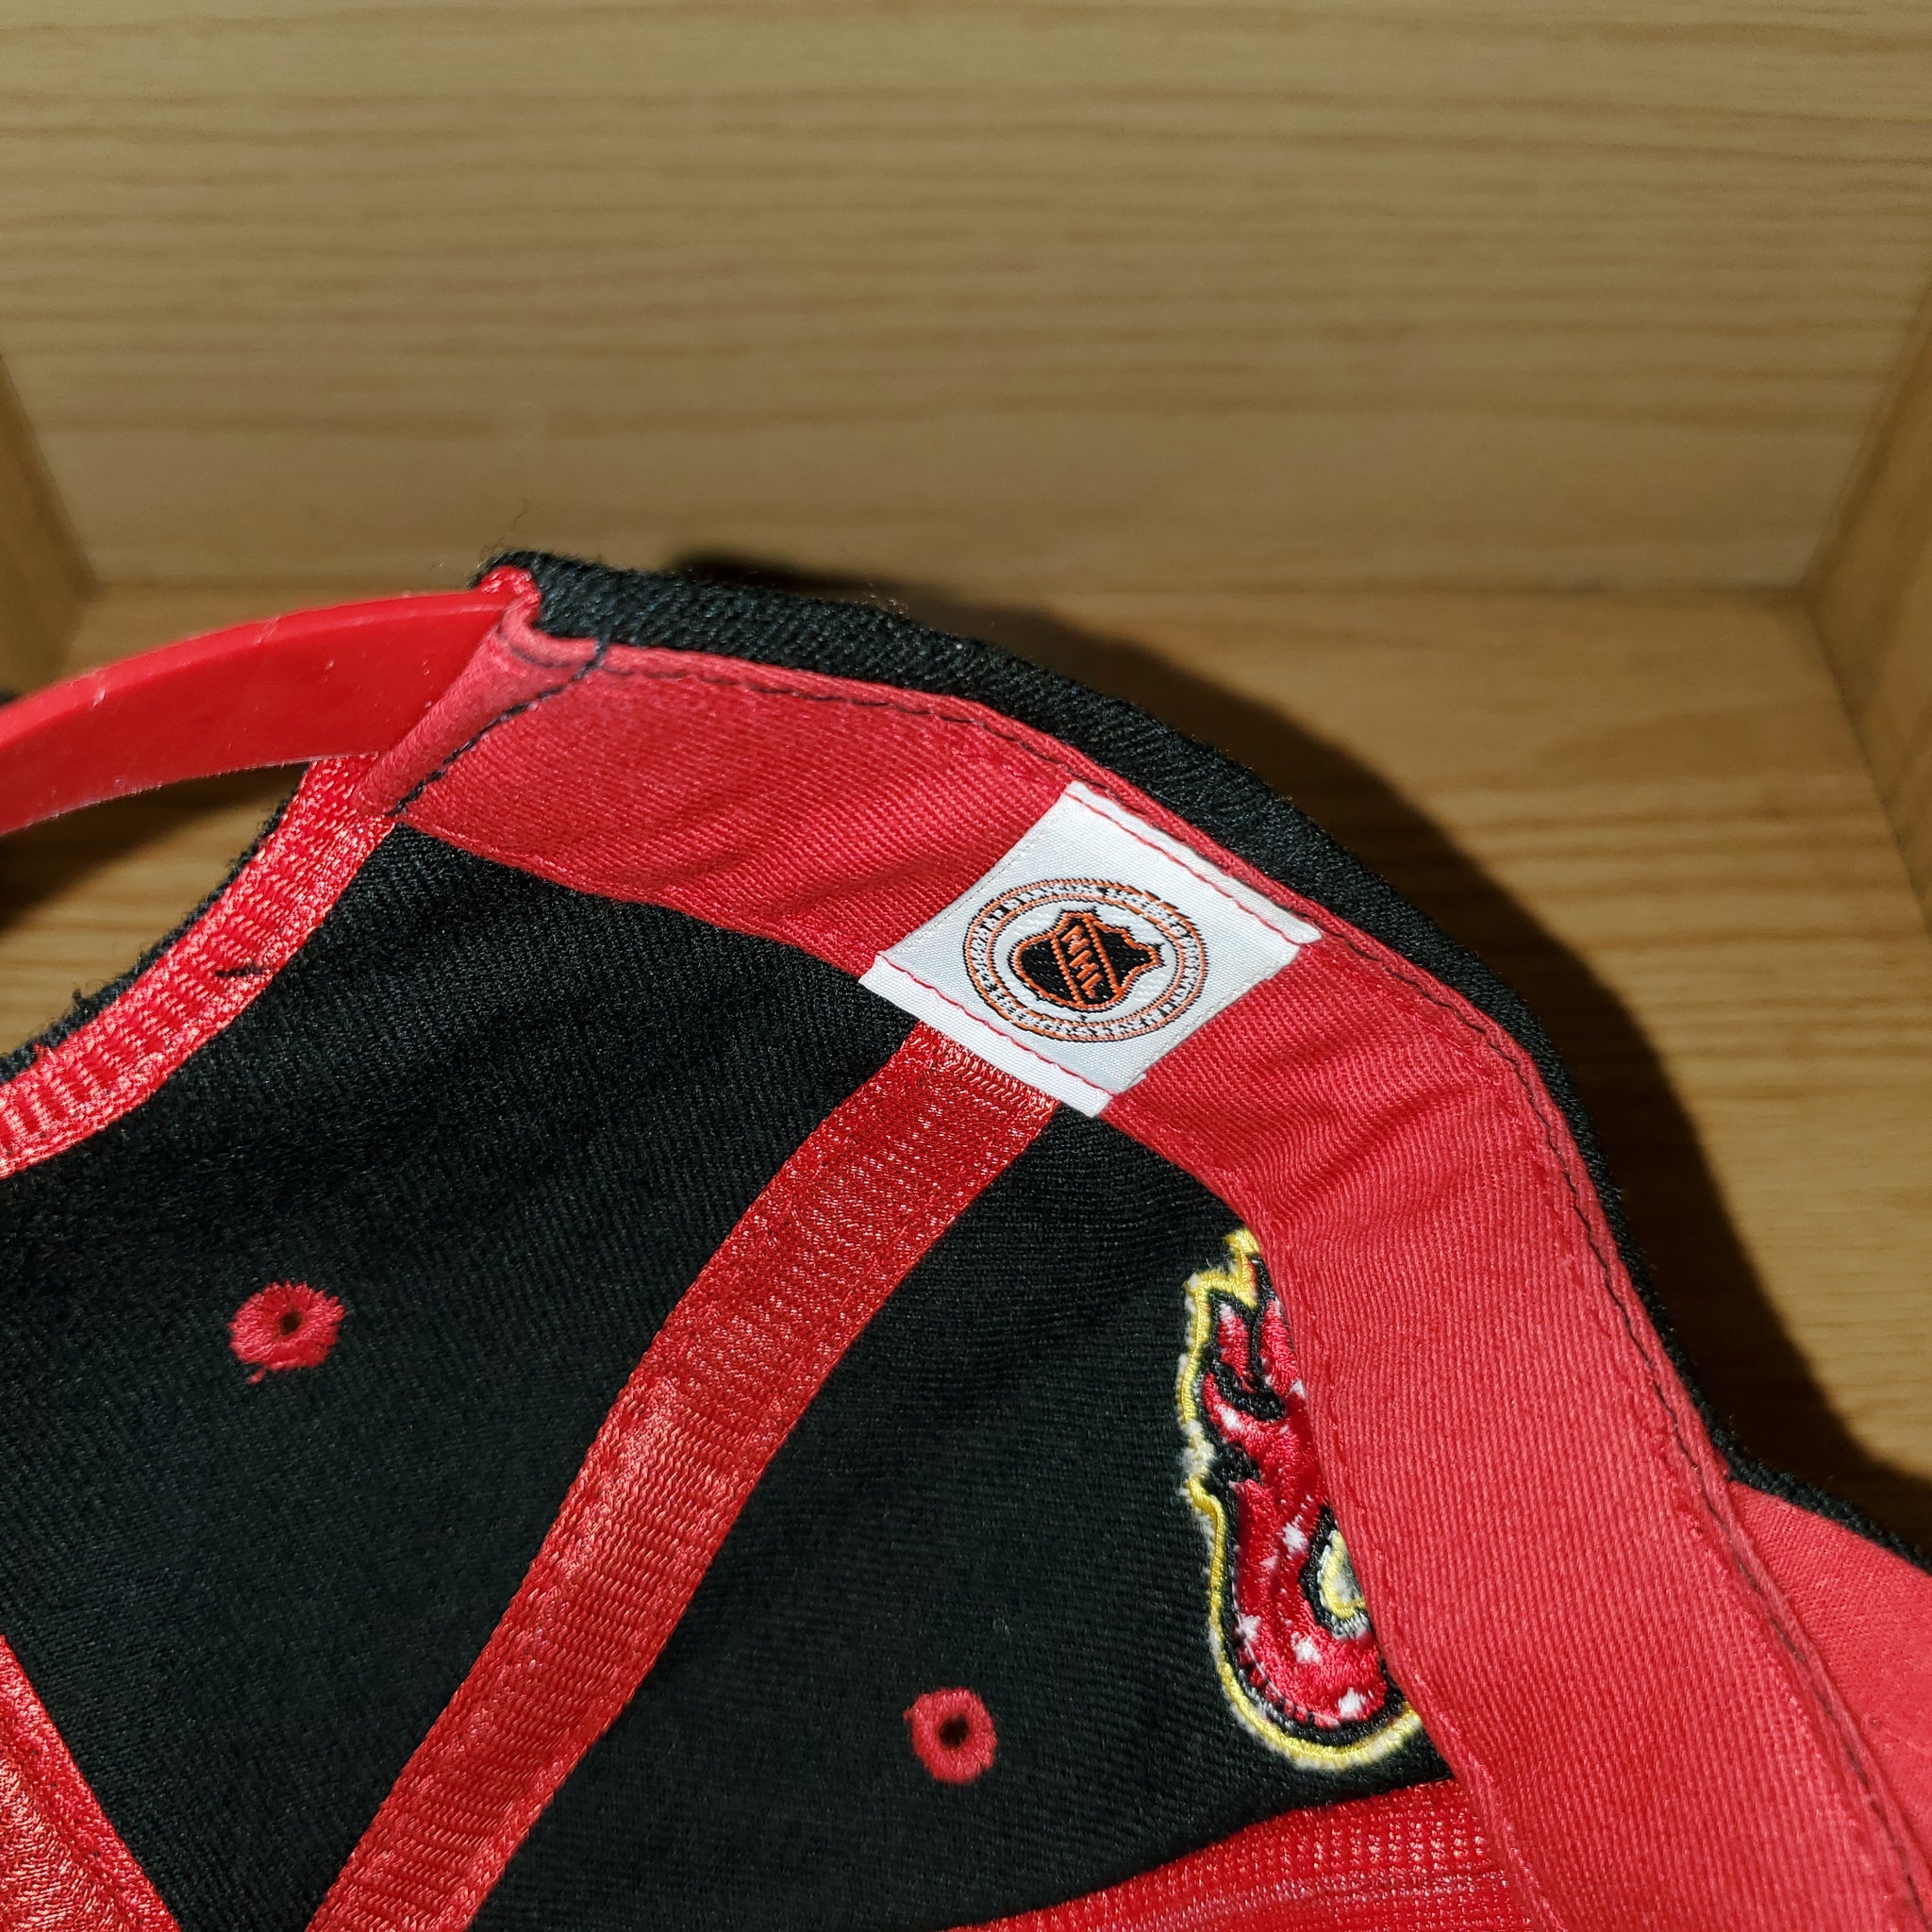 NWT NOS Vintage Calgary Flames NHL Script Snapback Hat Cap The